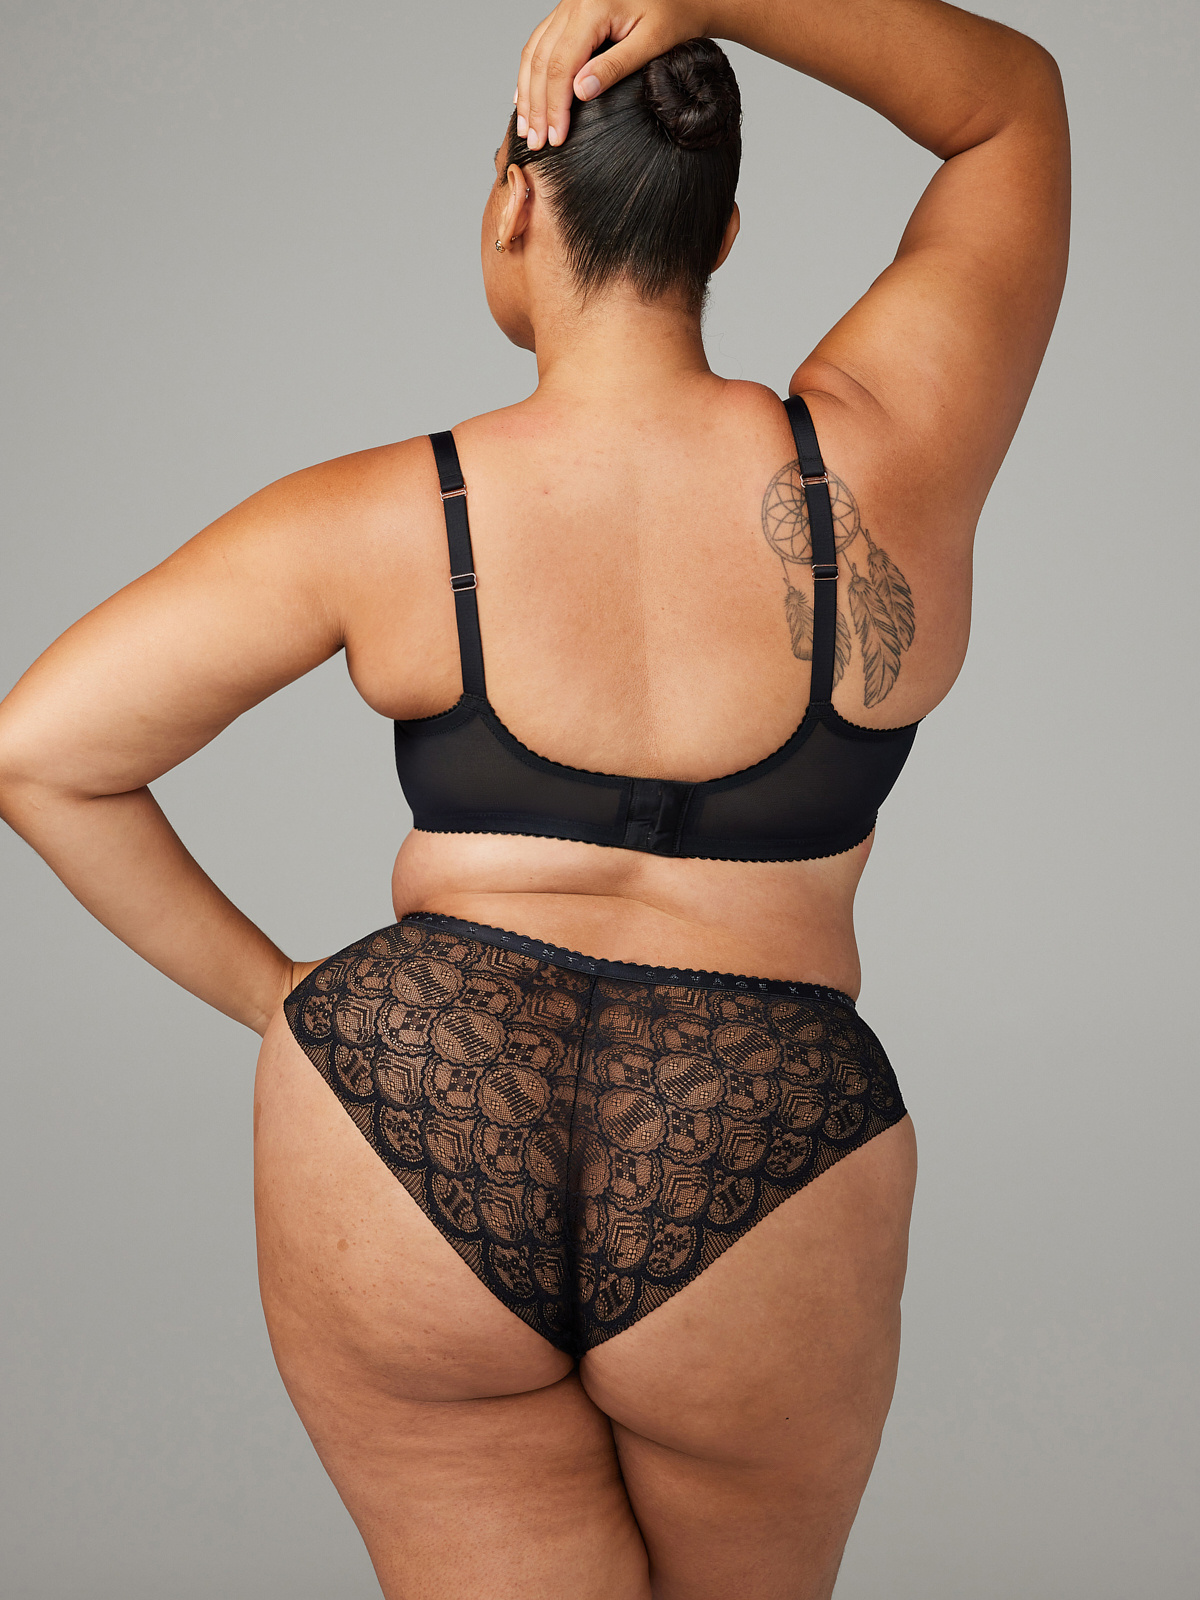 Wholesale quarter cup bra big women sex For Supportive Underwear